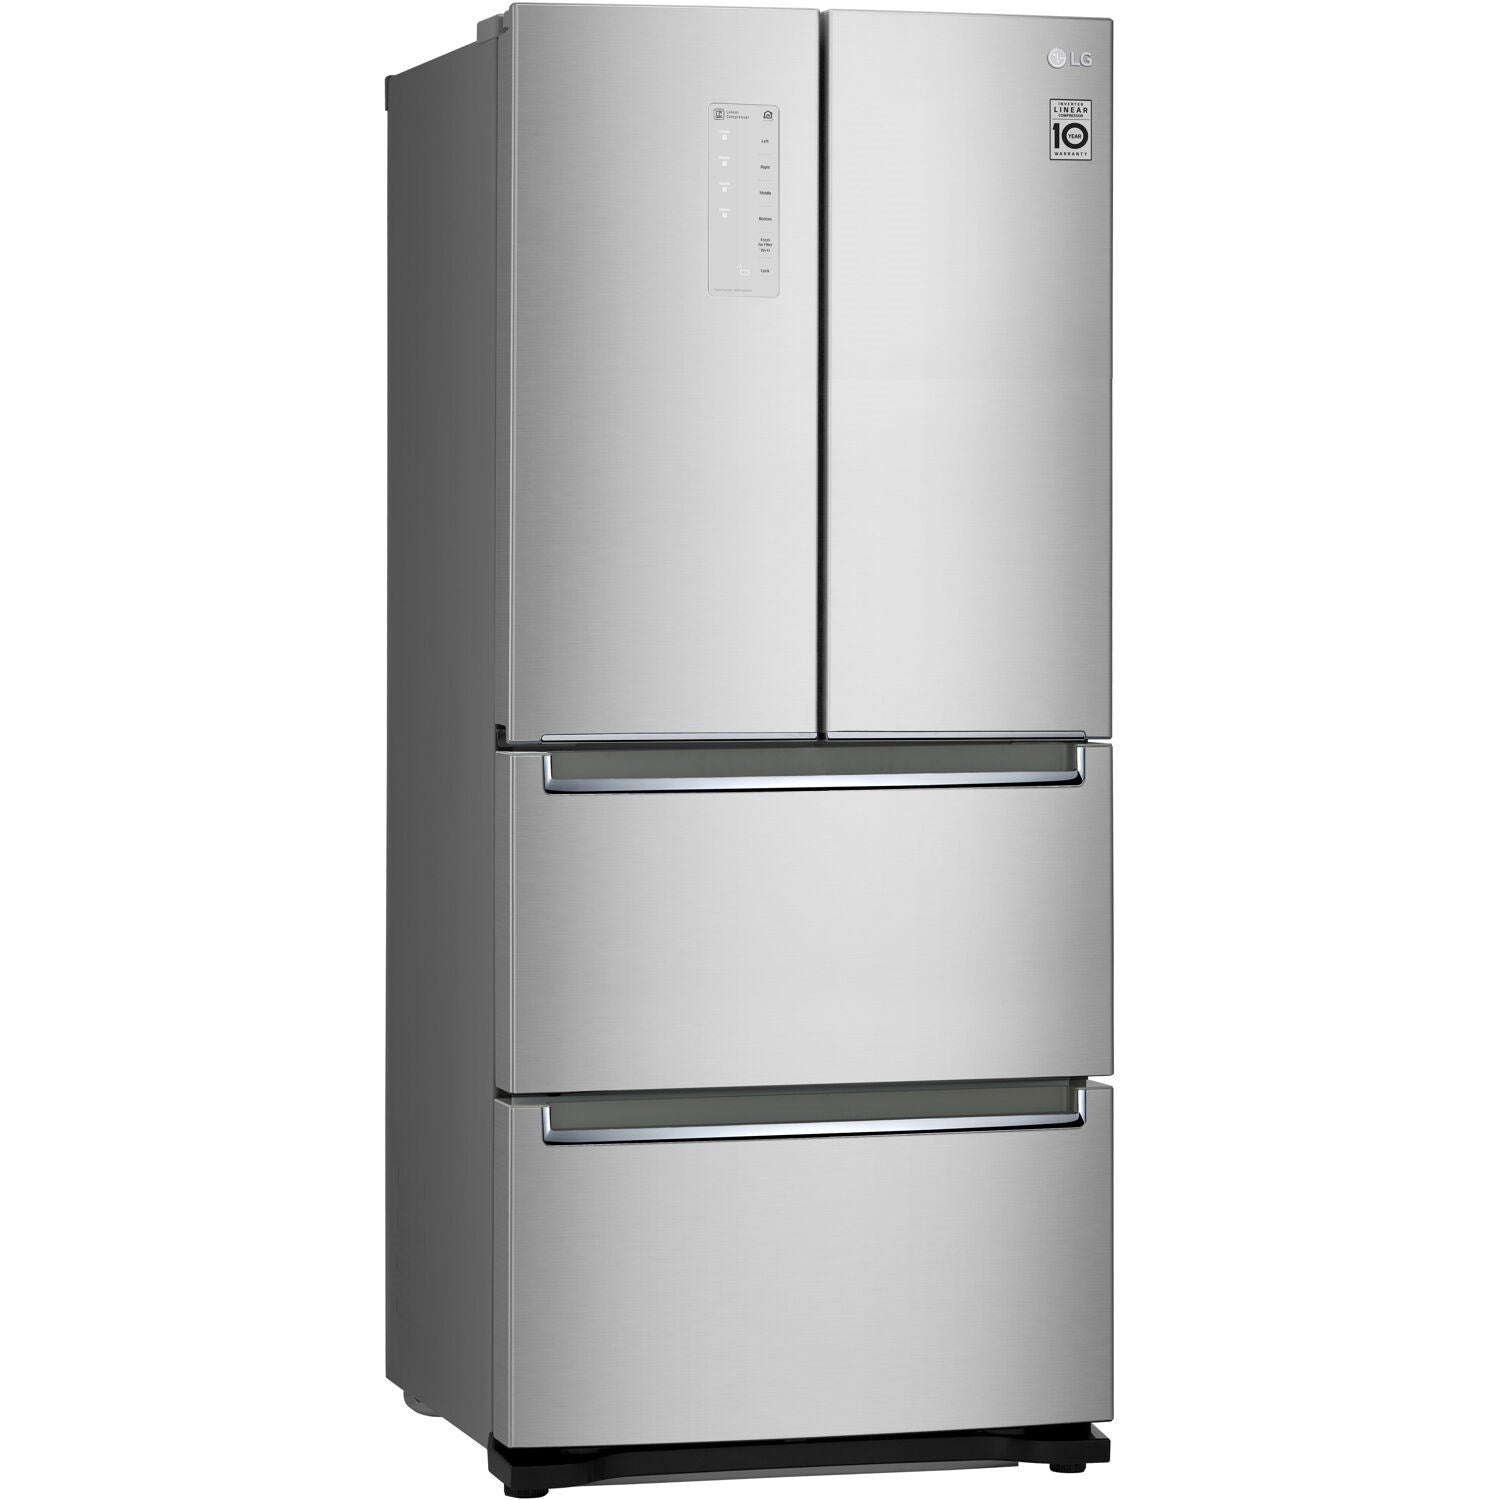 LG - 14.3 CF Kimchi Specialty Refrigerator, Standing Type, VCM